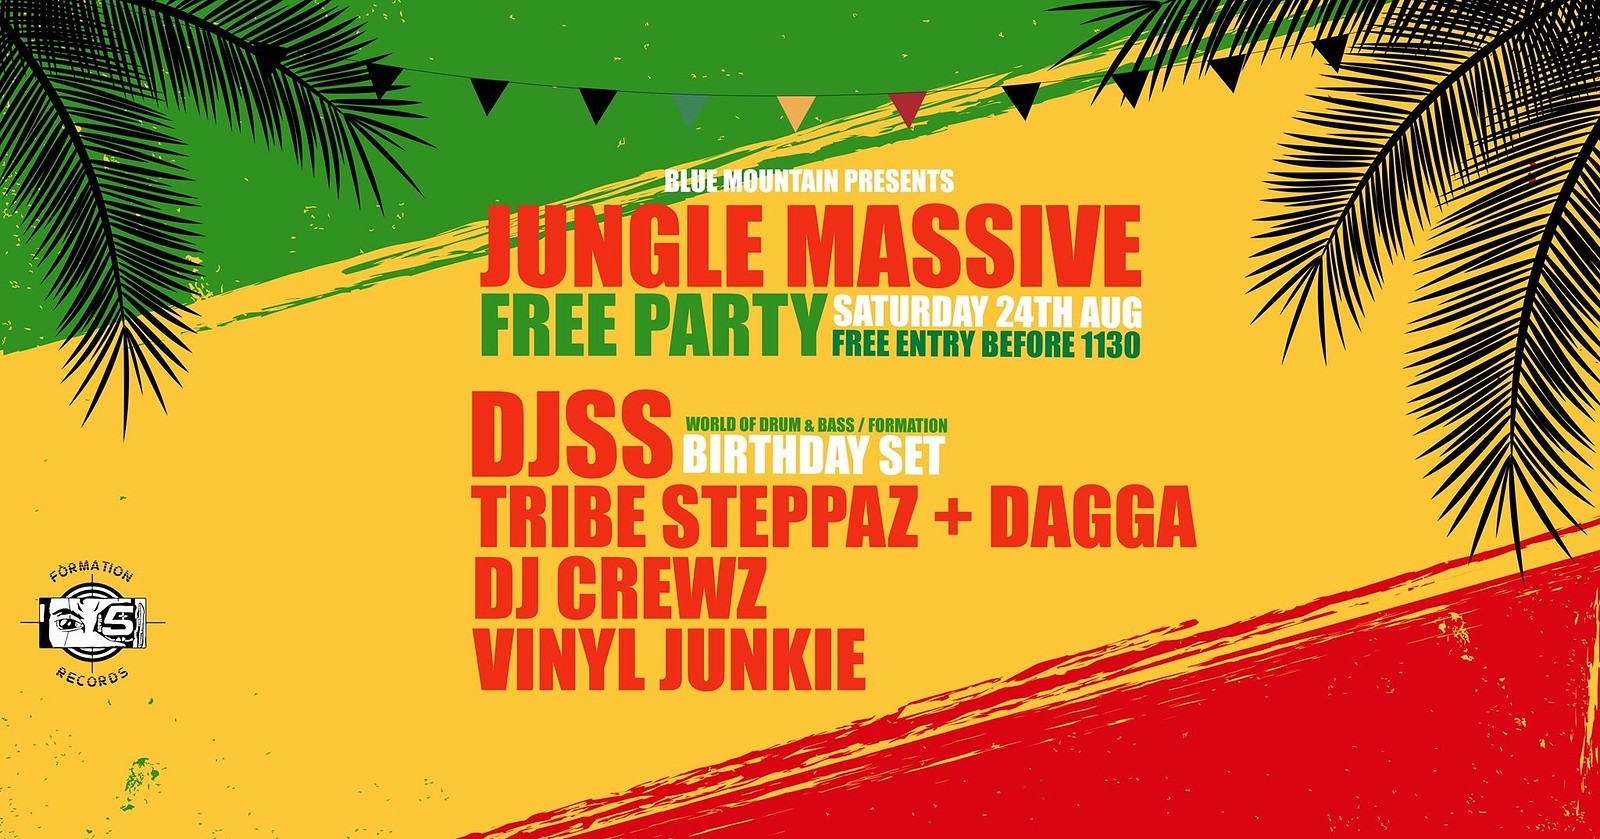 Jungle Massive Free Party: Bristol w/ DJSS at Blue Mountain